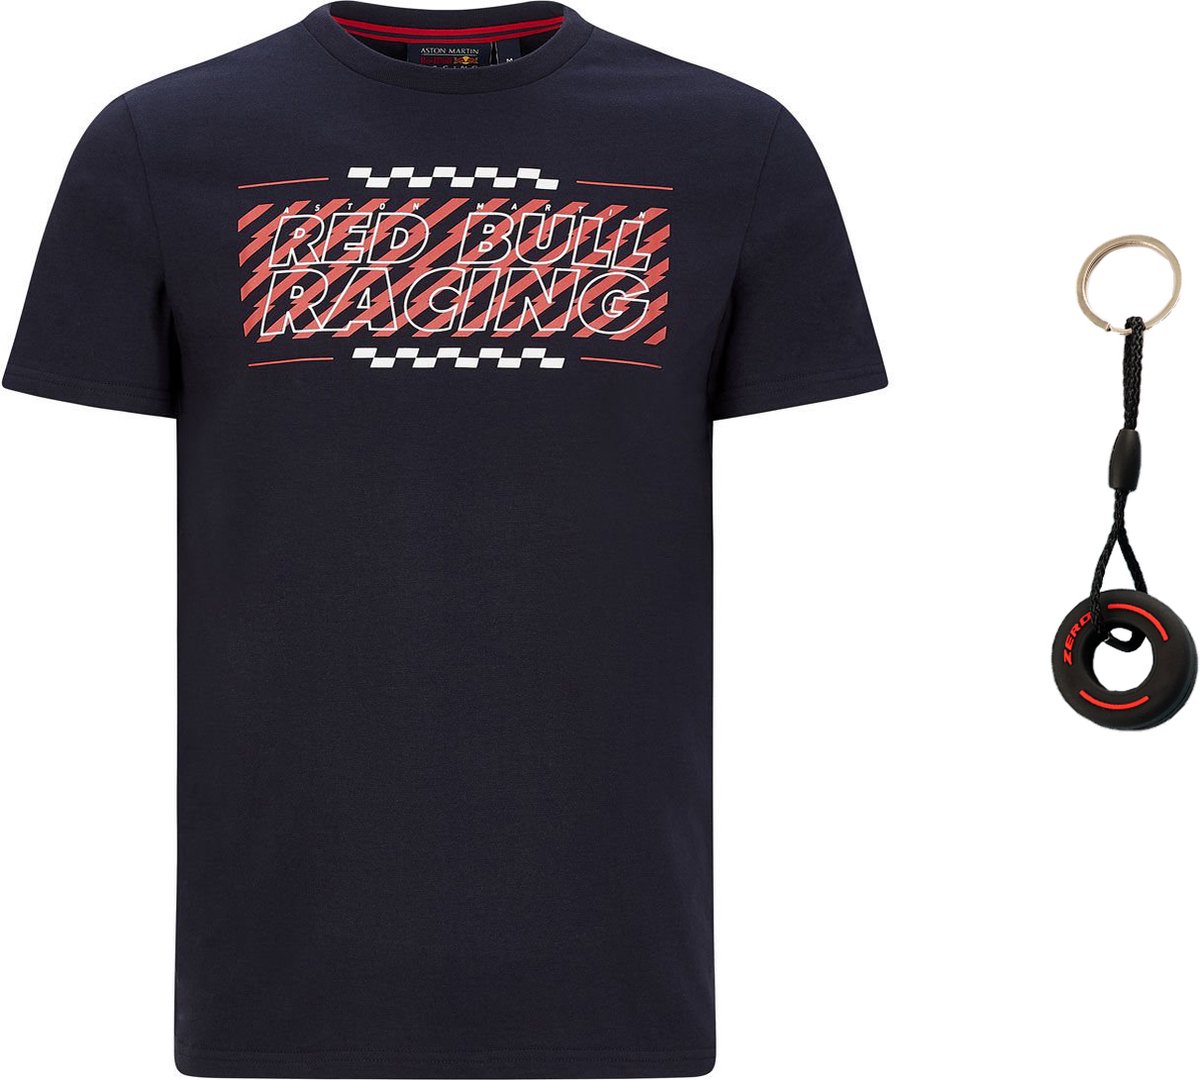 Red Bull Racing - Max Verstappen - Graphic T-Shirt - Maat M - inclusief F1 sleutelhanger - Formule 1